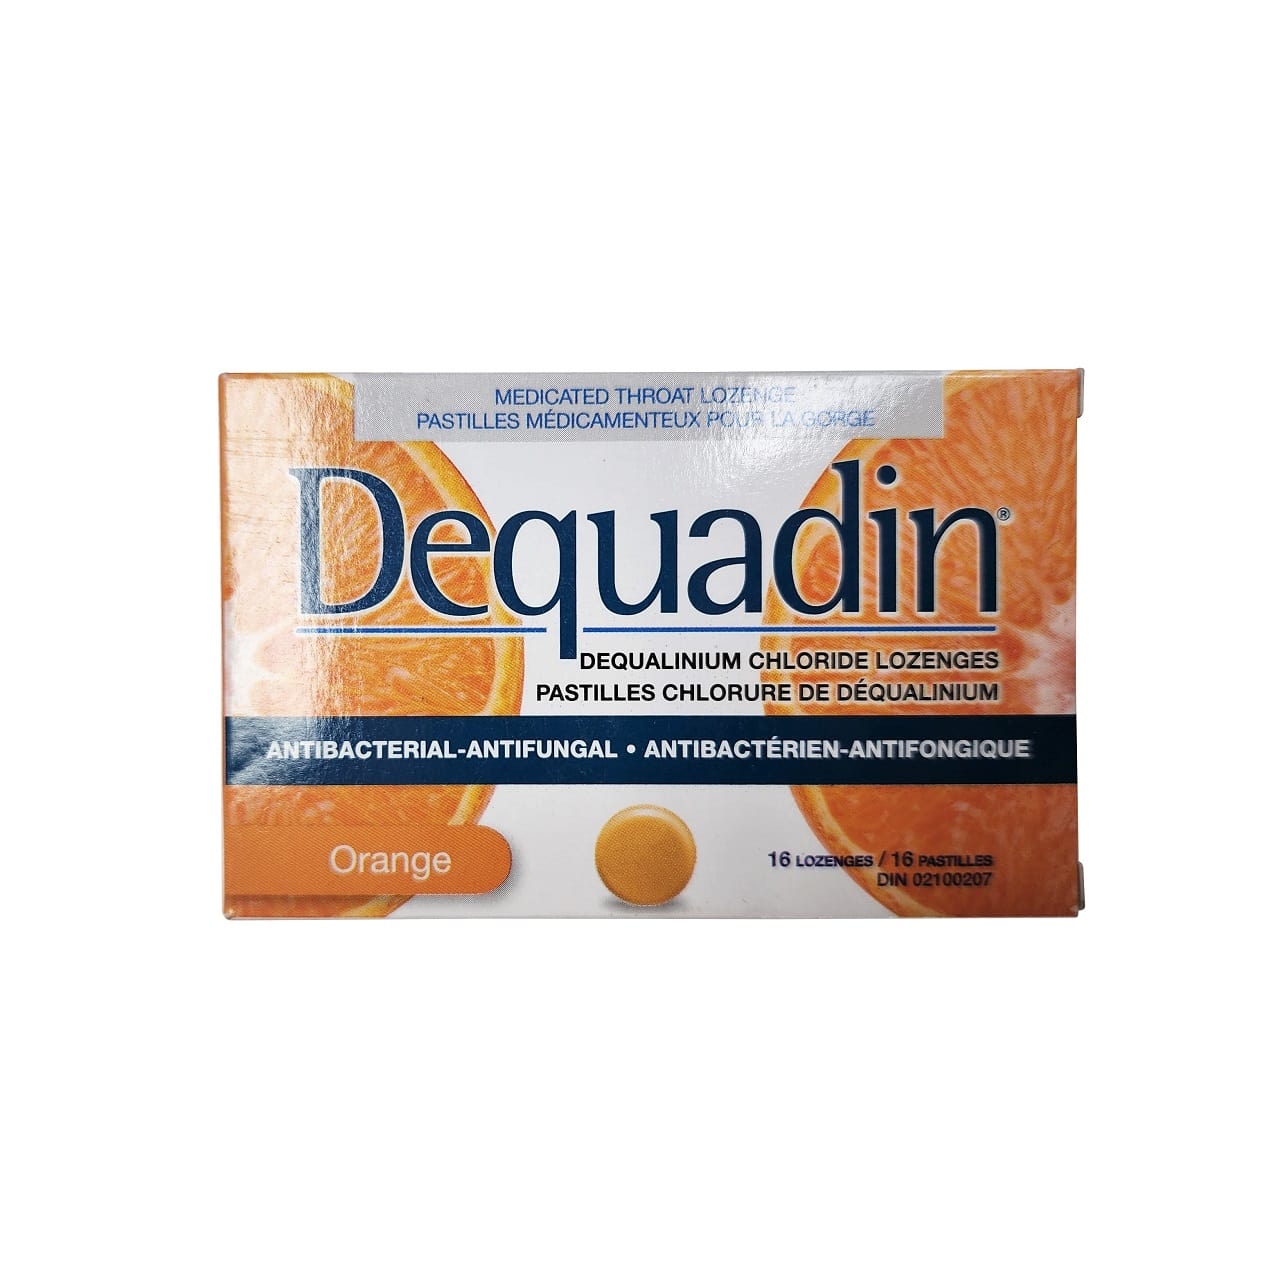 Product label for Dequadin Dequalinium Chloride Lozenges Orange Flavour (16 lozenges) 